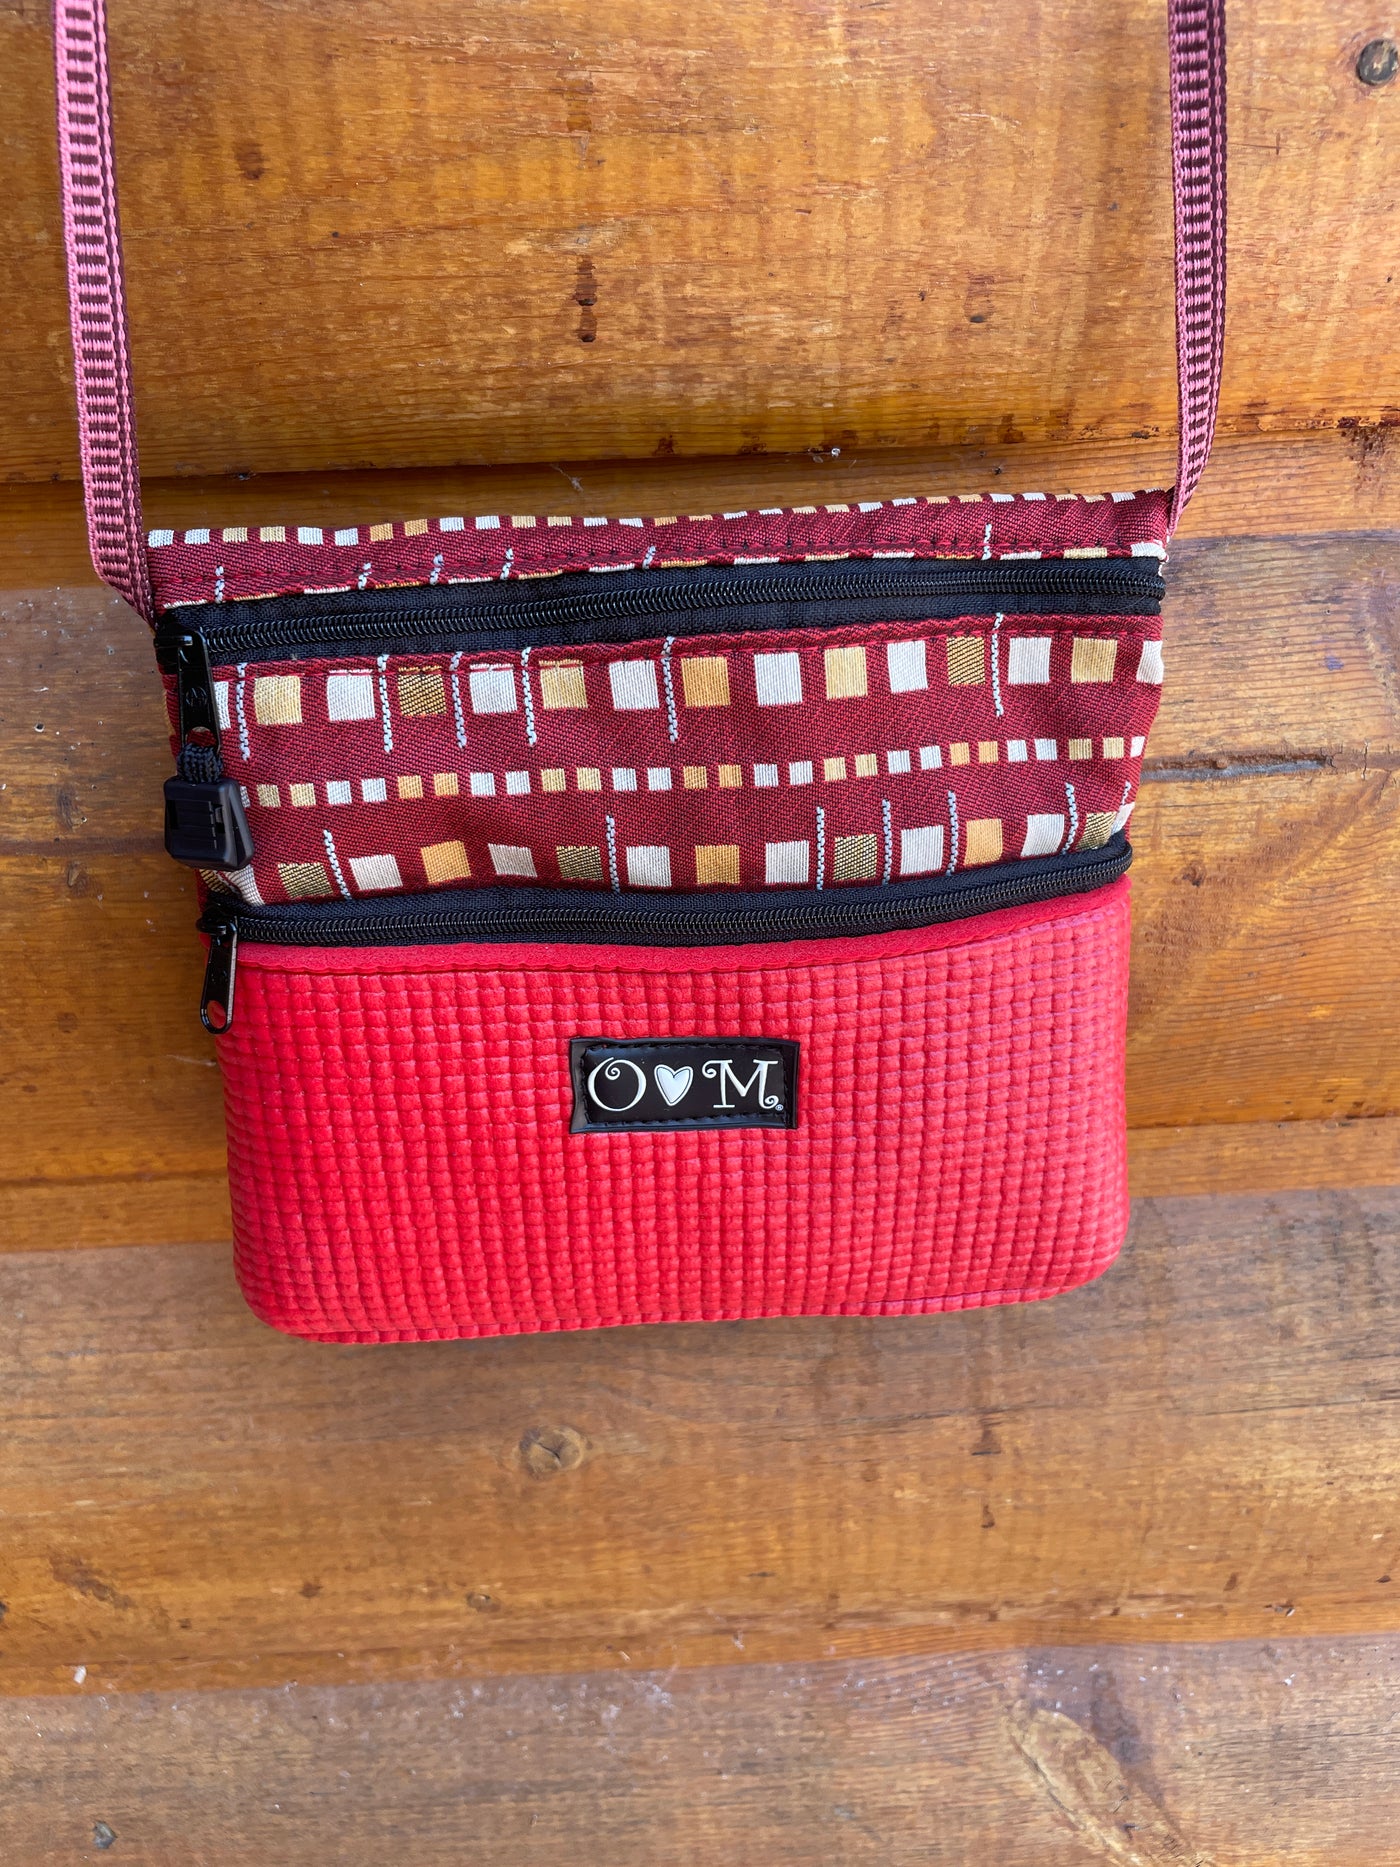 R M Jajal designer clutch and handbag - #embroideryslingpurse #rmjajal  #madeinindia #BestQualityProducts #handmade #khadimasks #canvasbag  #canvaspouch 🎁🎁🎁🎁🎁🎁🎁🎁🎁 #cloth purse clutch#jute embroidery sling  purse#handmade#Cloth purse#hand ...